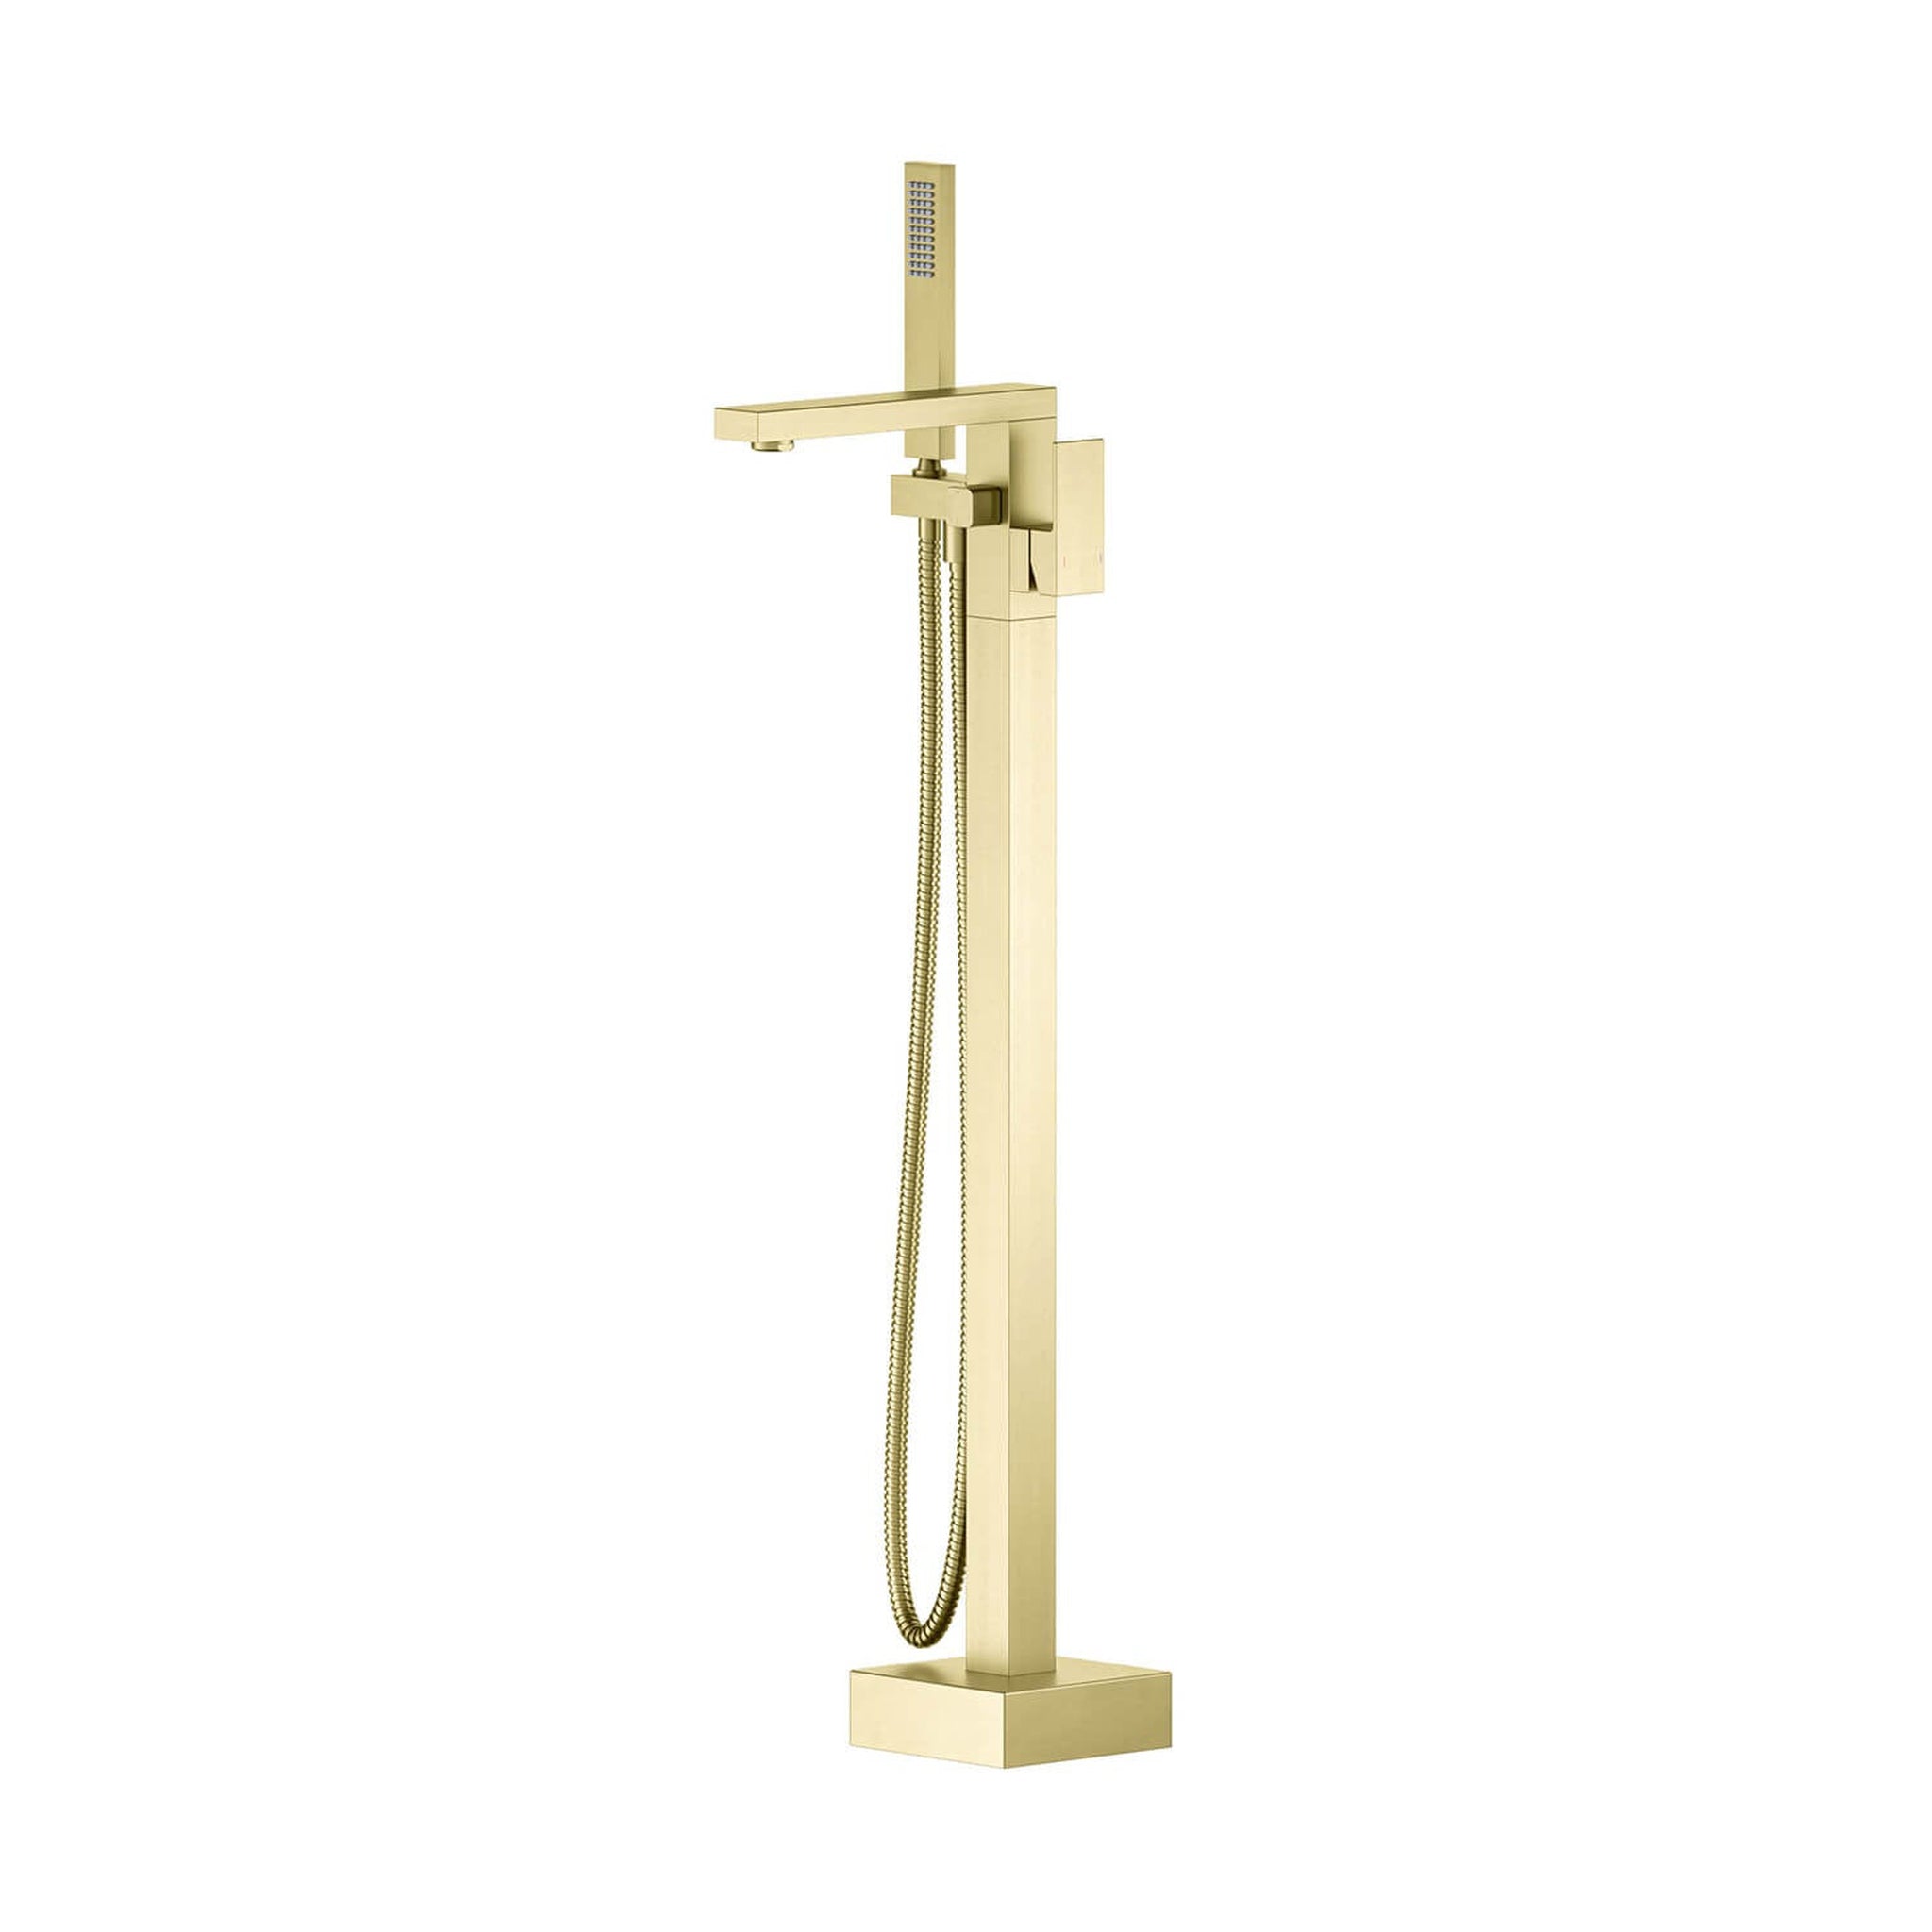 KIBI, KIBI Cube Brass Single Handle Floor Mounted Freestanding Tub Filler With Hand Shower in Brushed Gold Finish